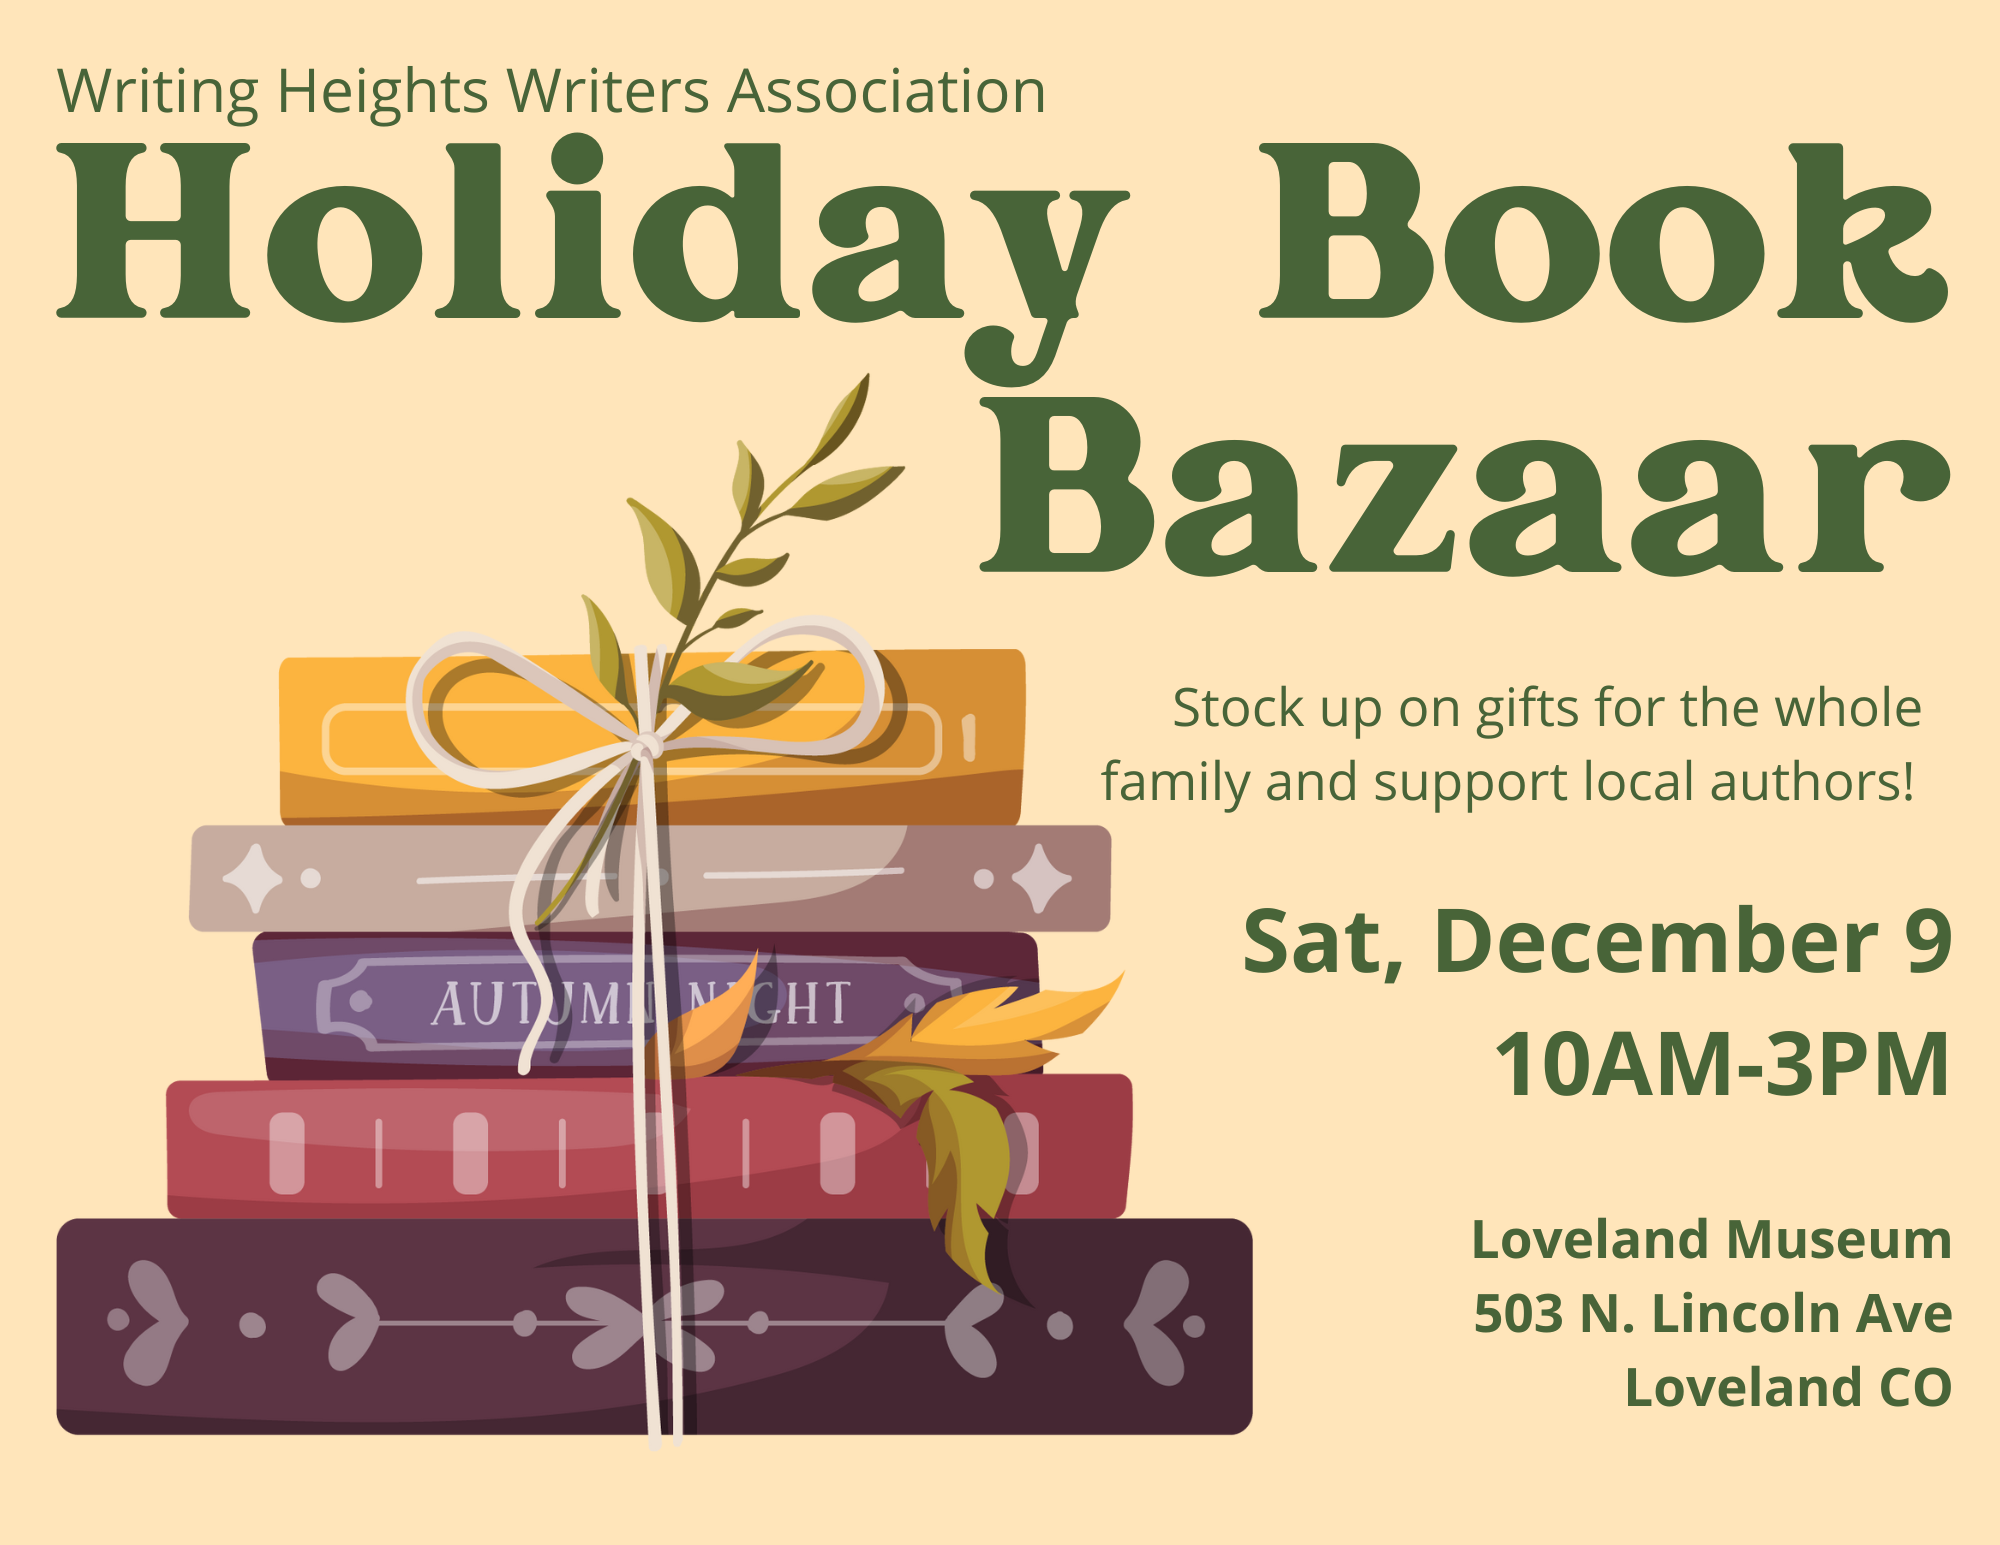 Holiday Book Bazaar Loveland Museum #WritingHeightsAuthorsAssociation #Colorado #books #gifts #weekend #bookreaders